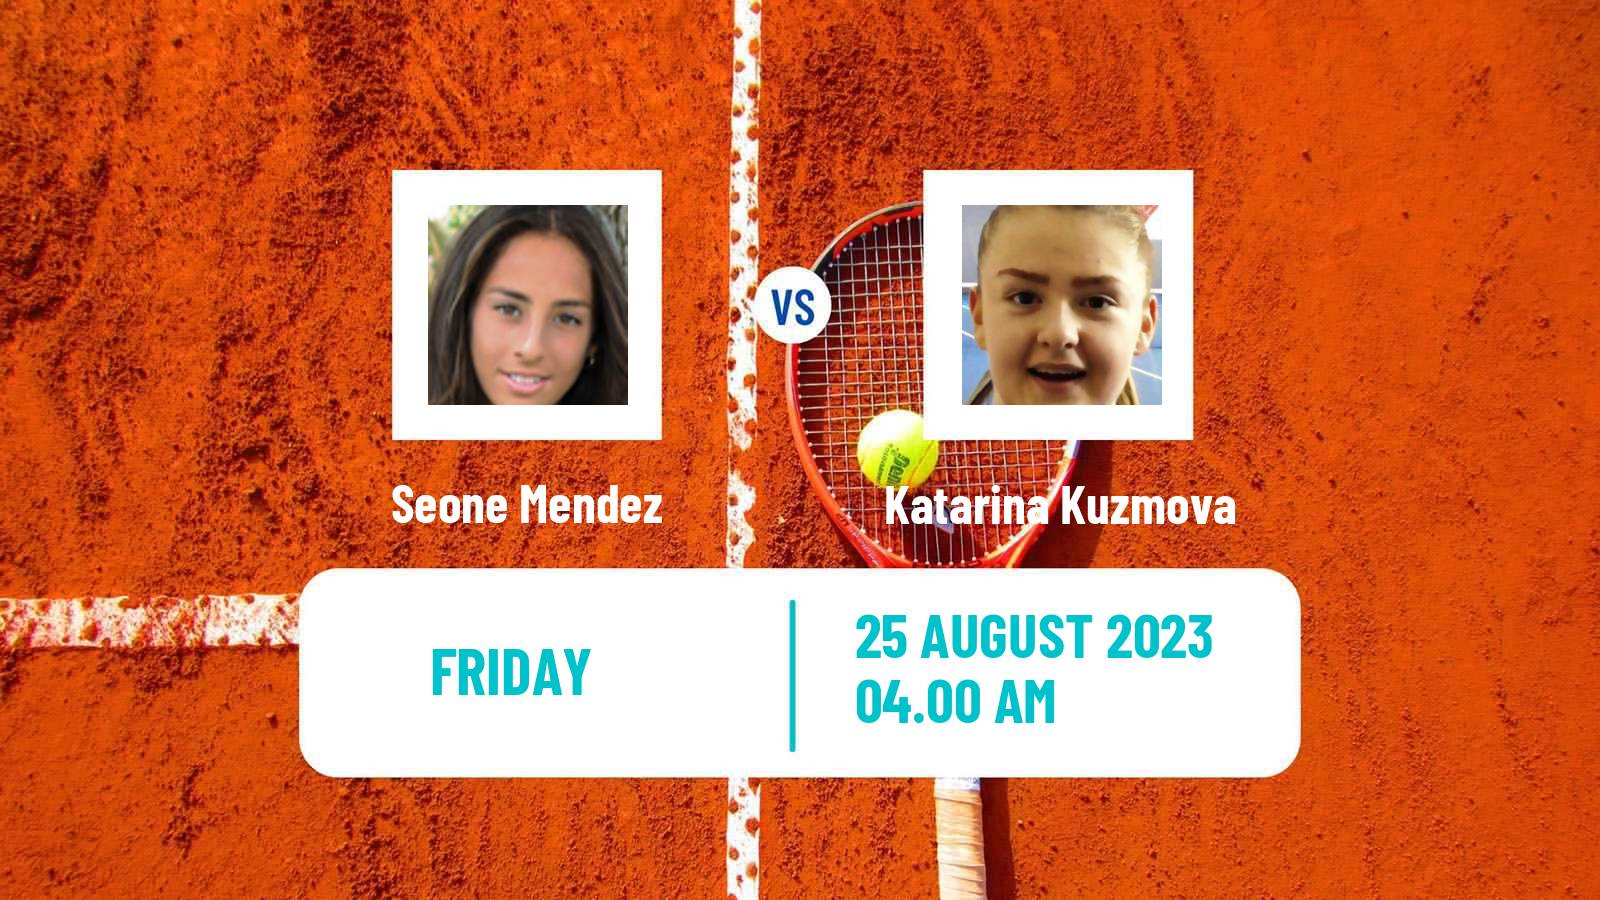 Tennis ITF W25 Bydgoszcz Women Seone Mendez - Katarina Kuzmova